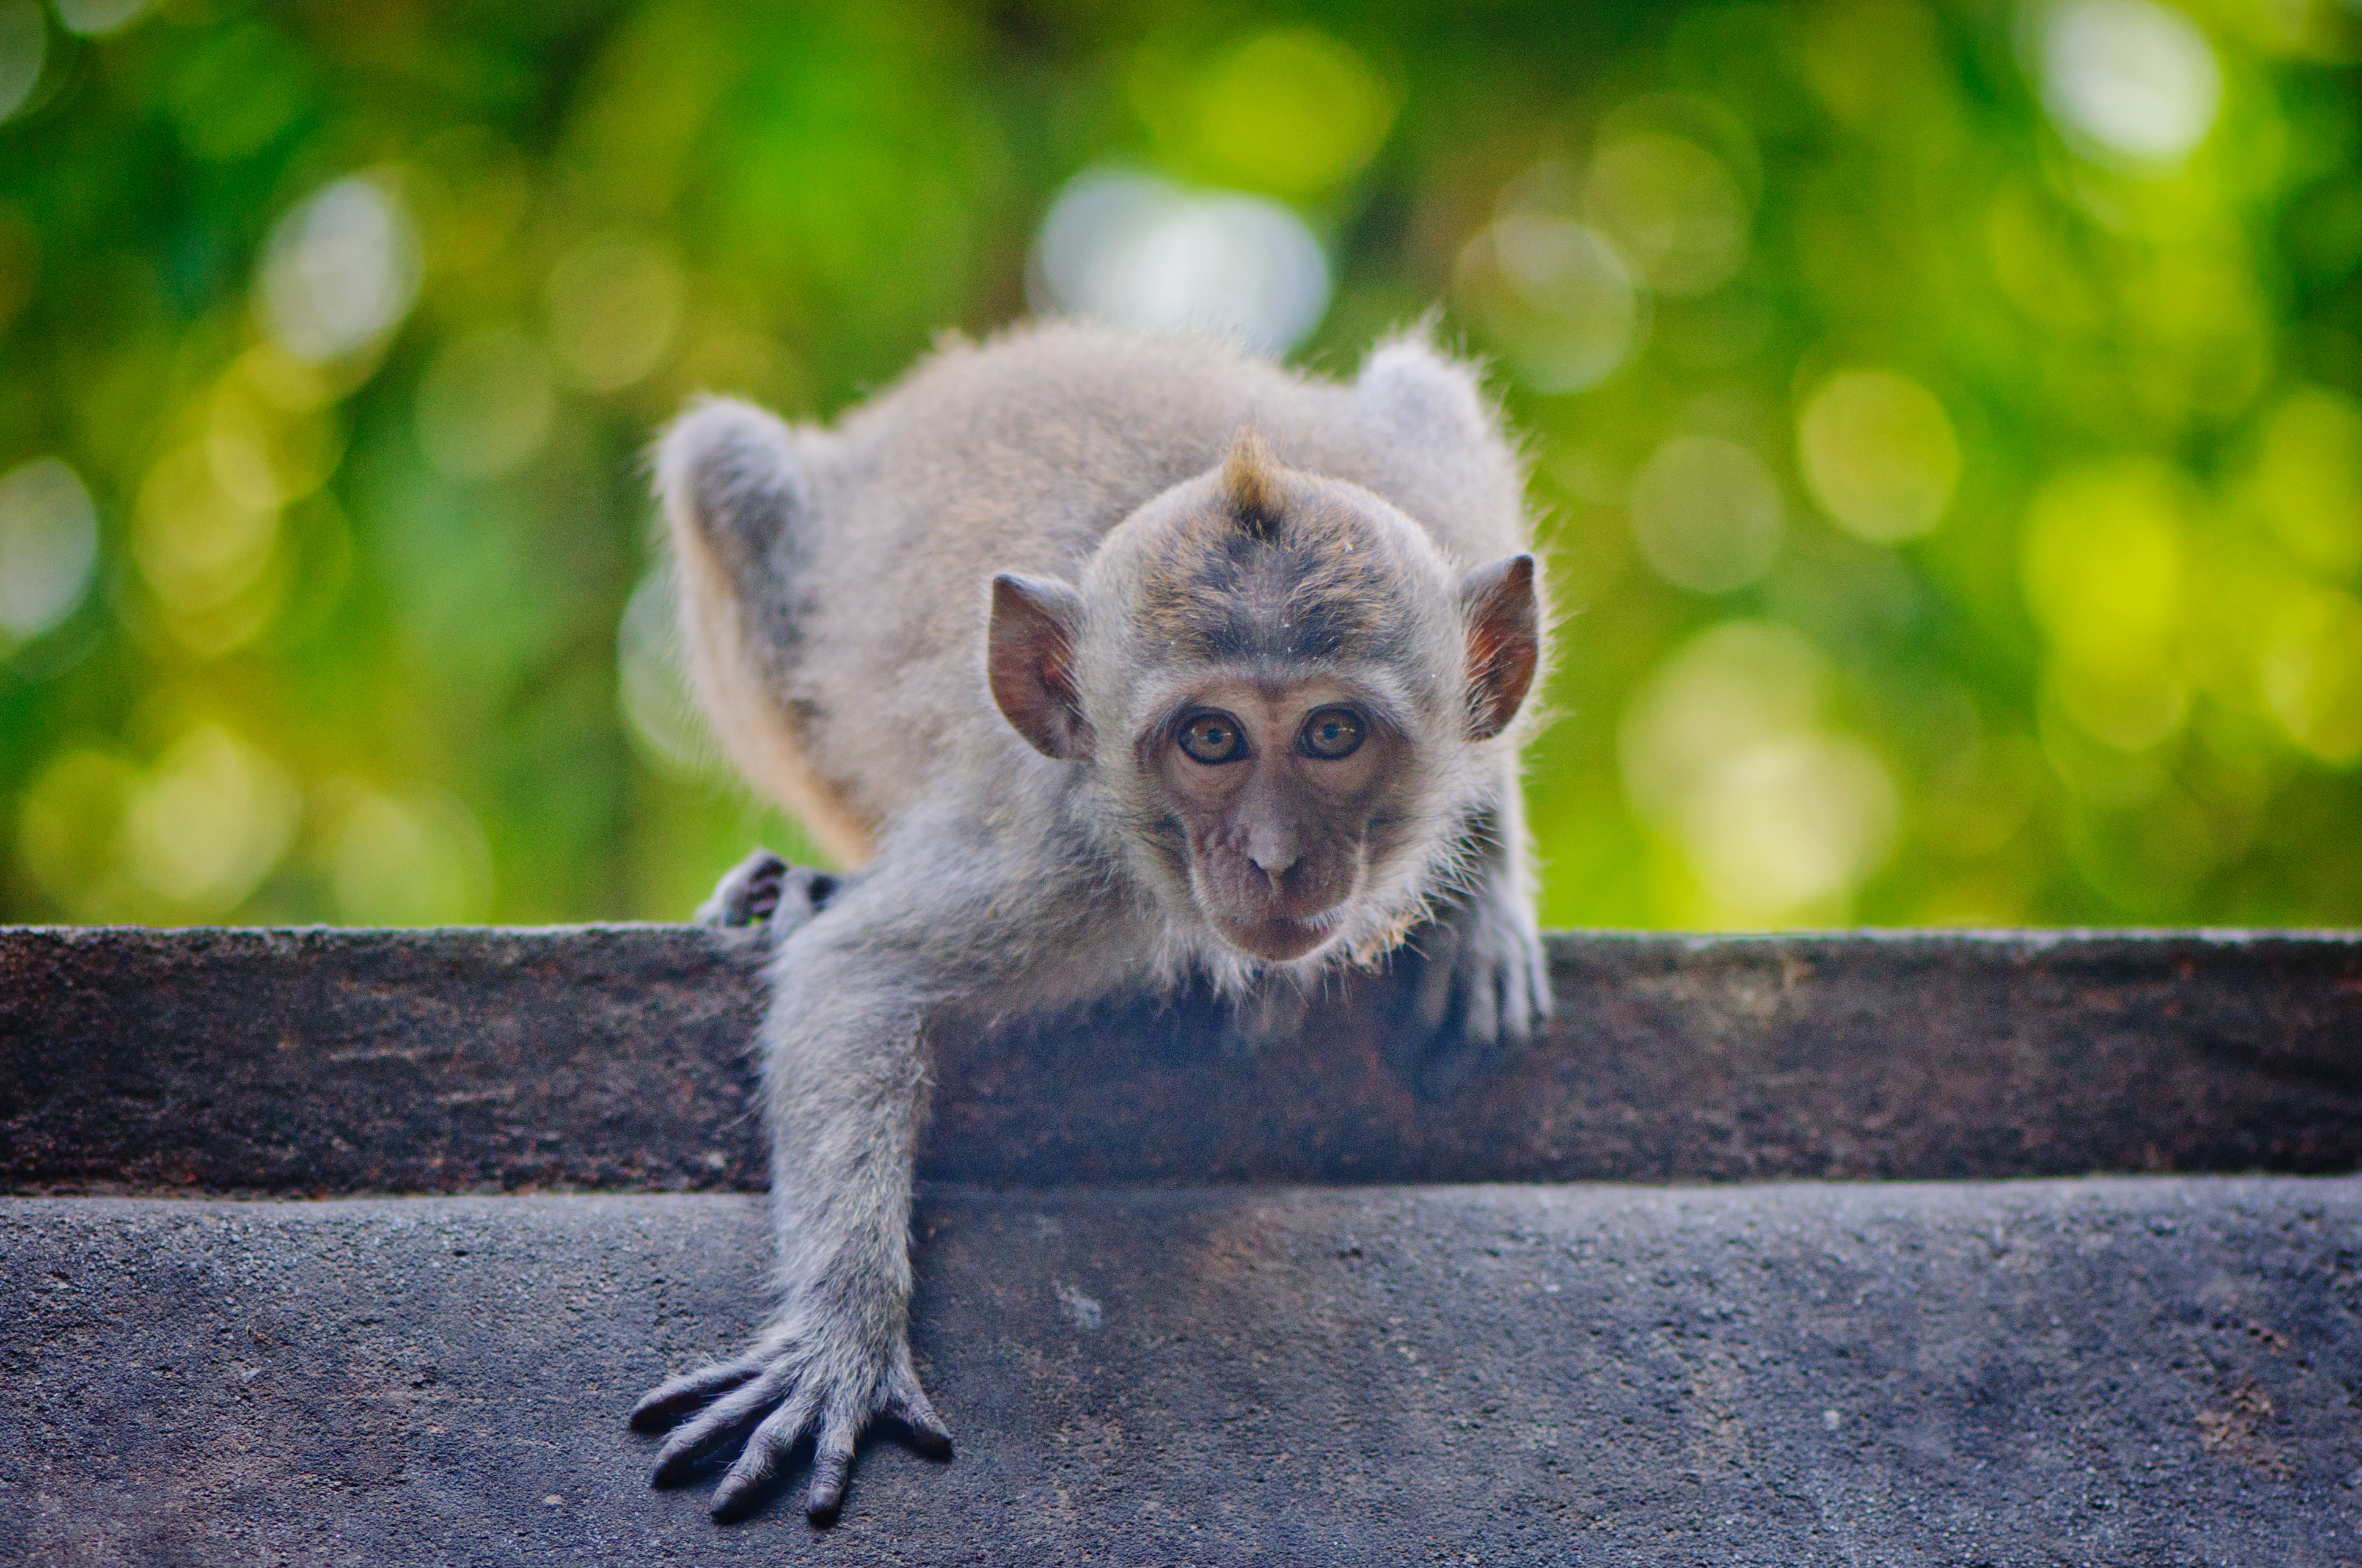 lombok-temple-monkeys-5.jpg